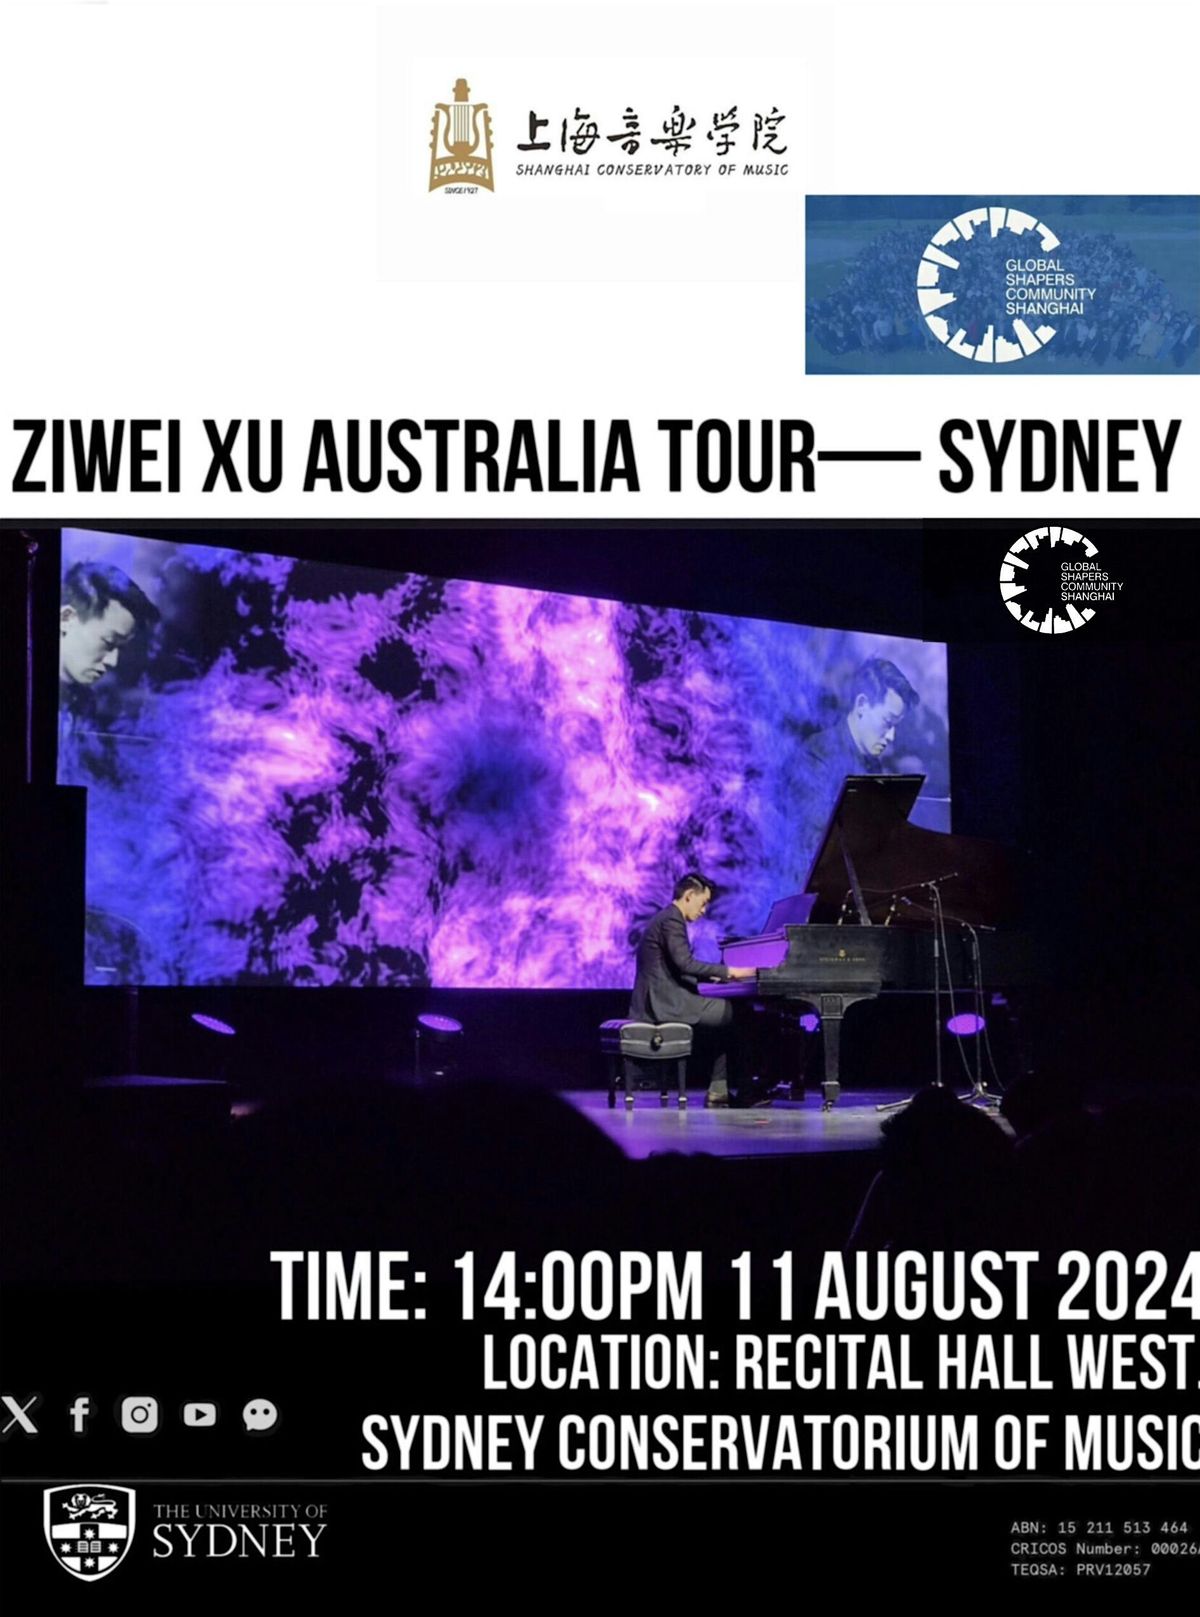 Ziwei Xu Australia piano recital tour Sydney